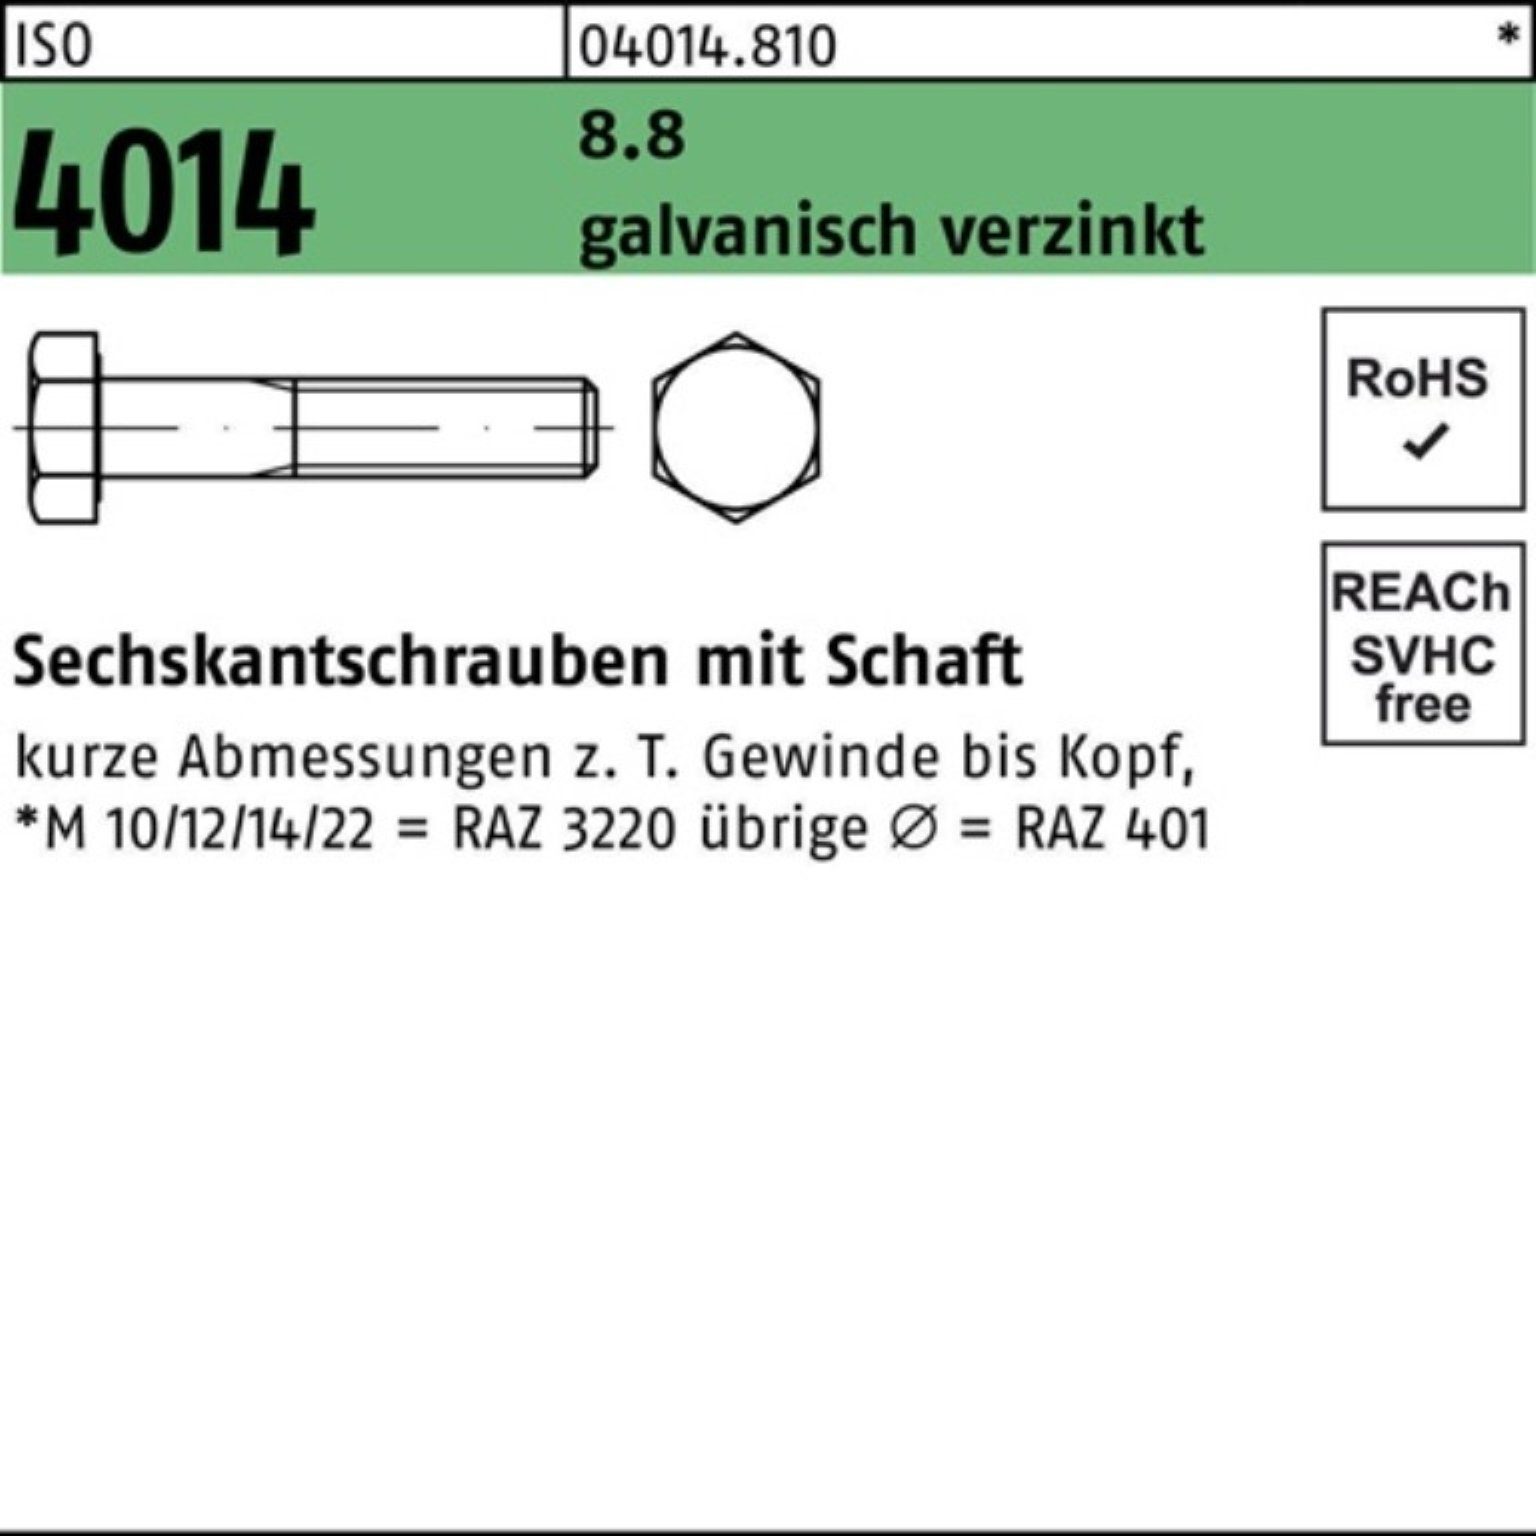 Bufab Sechskantschraube 100er Pack Sechskantschraube ISO 4014 Schaft M48x 140 8.8 galv.verz. 1 | Schrauben